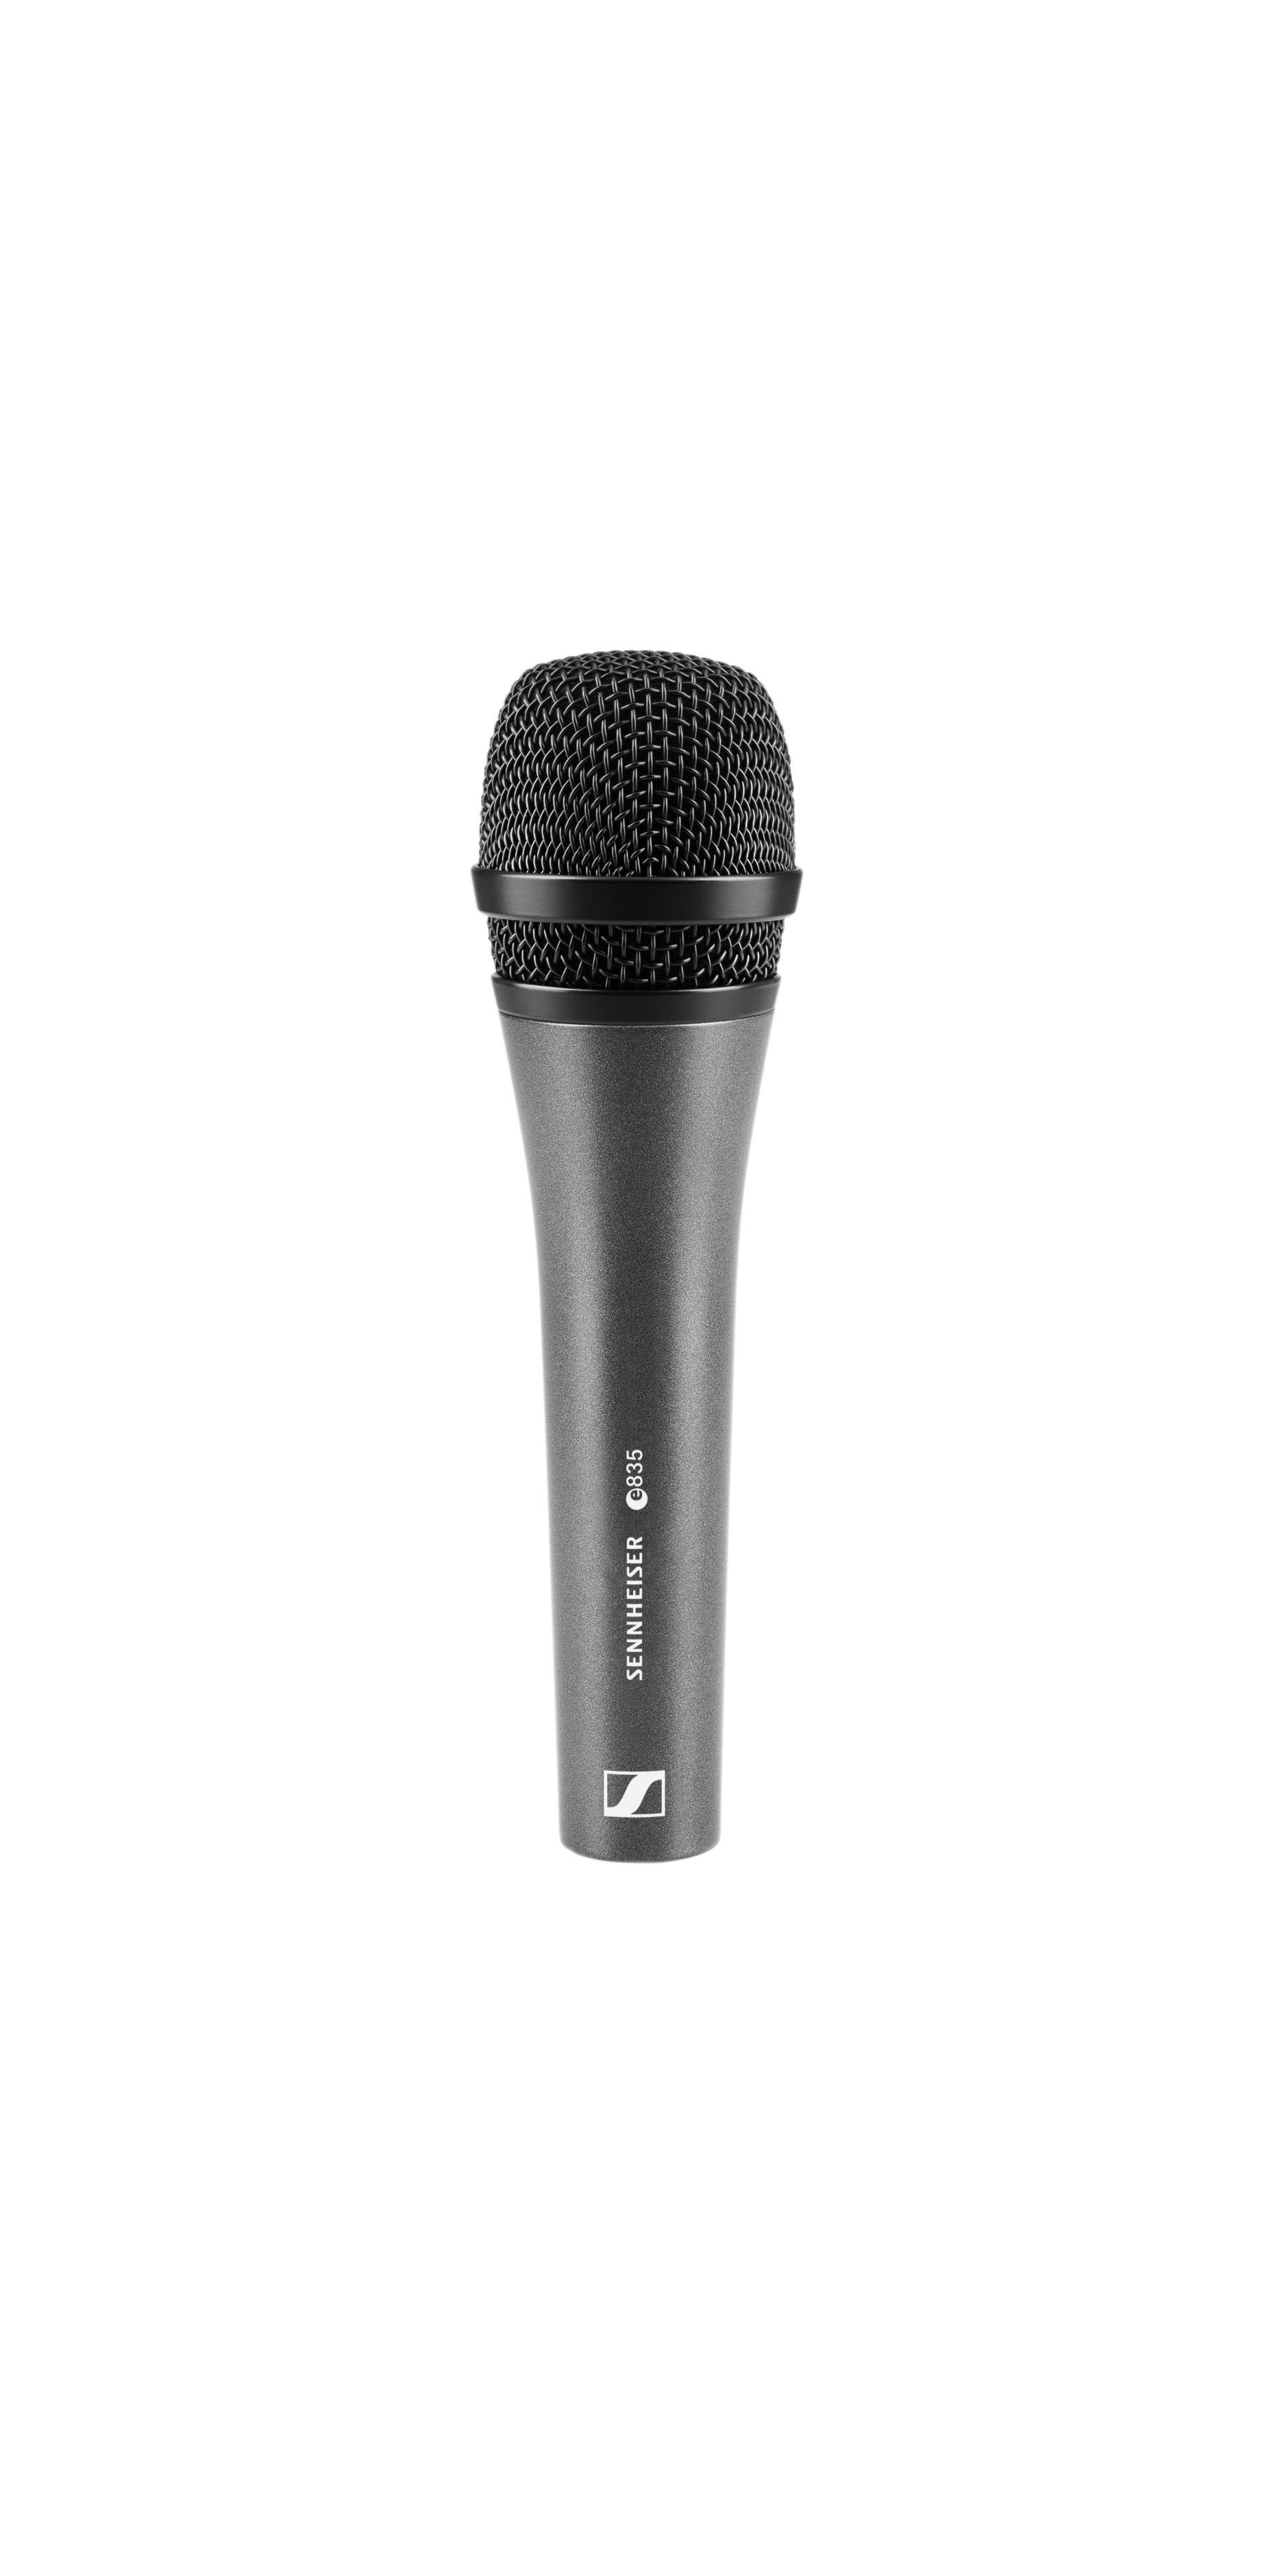 Share Audio Professional Wireless Microphone